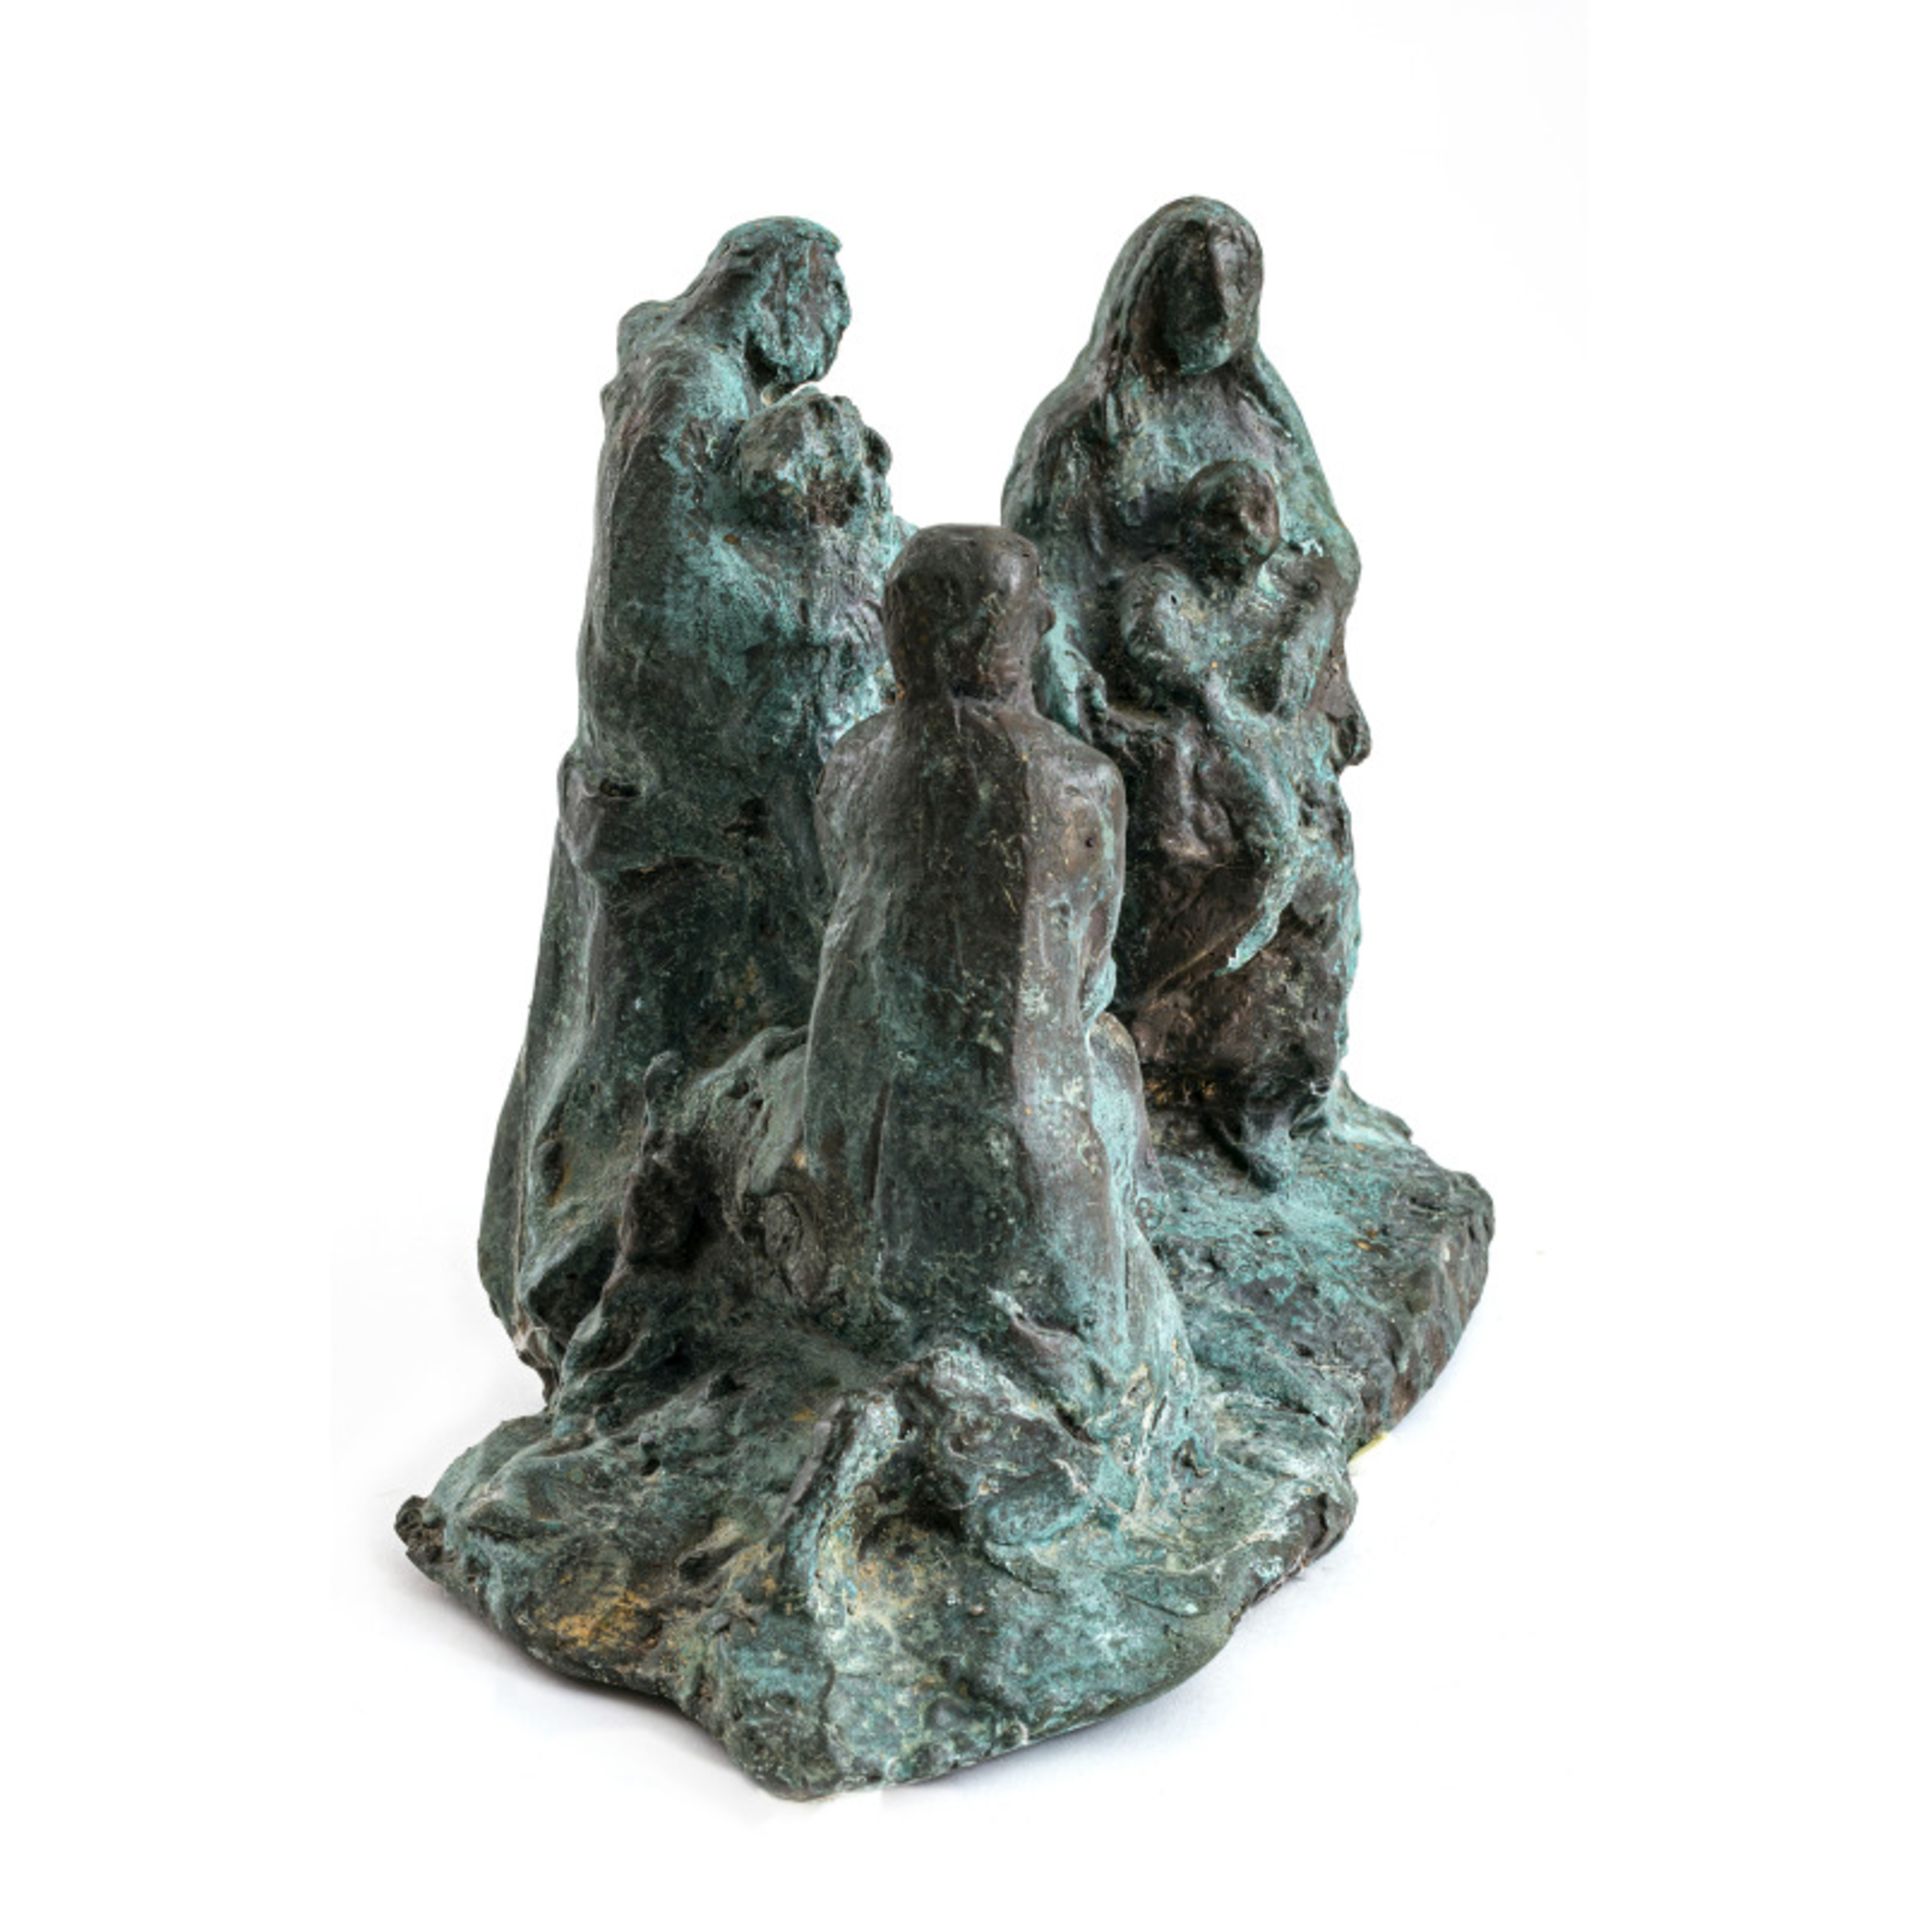 Unbekannt - Group of figures - Image 2 of 3